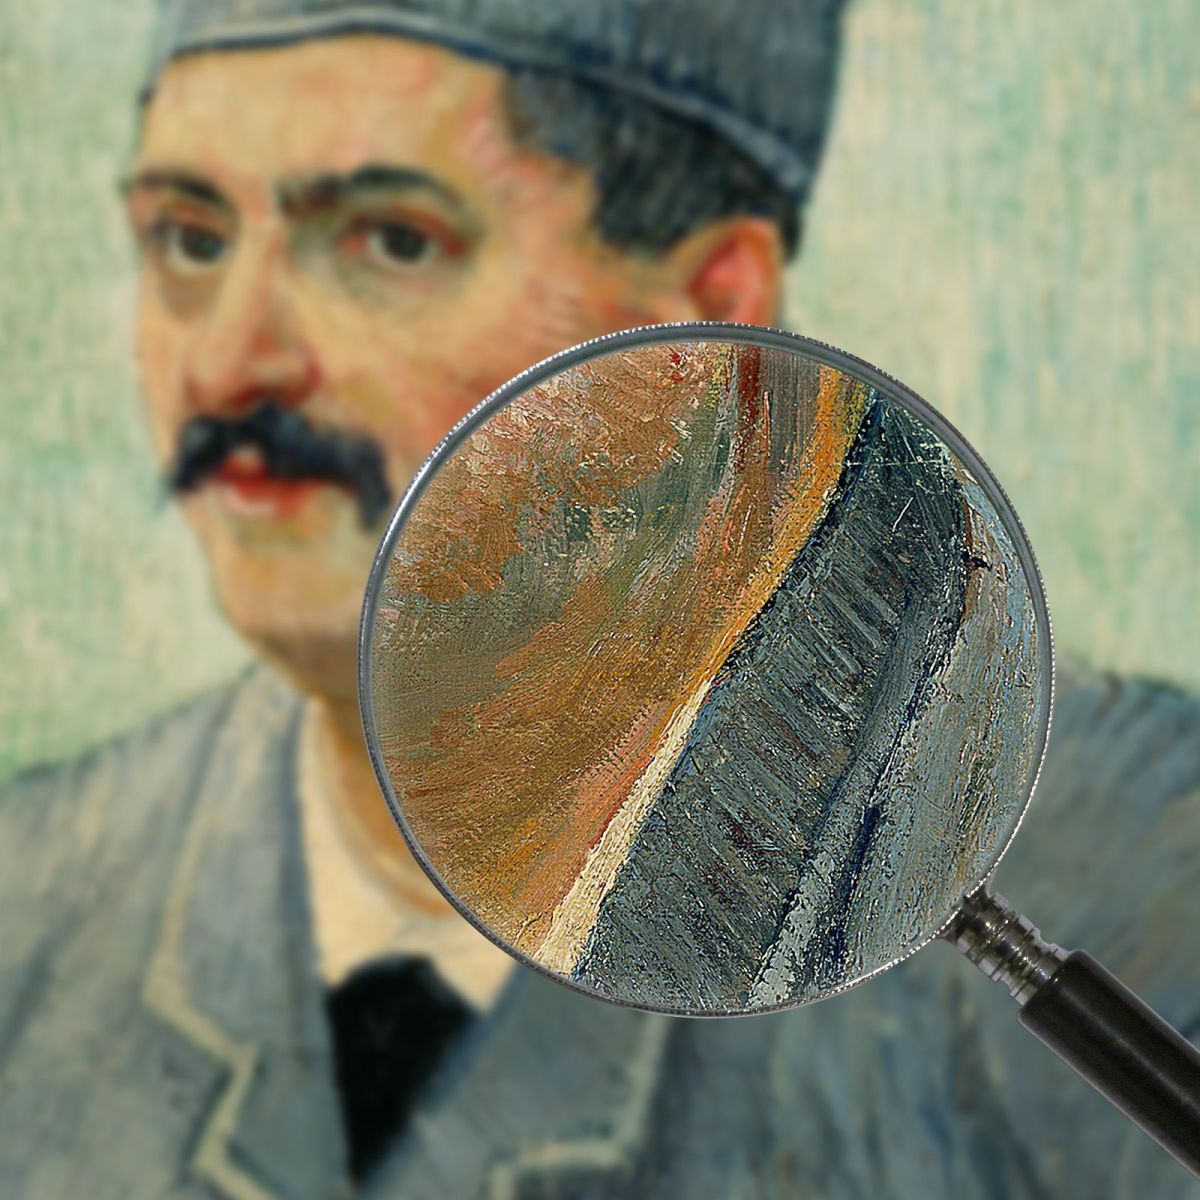 Portrait Of A Restaurant Owner Van Gogh Vincent canvas print vvg93